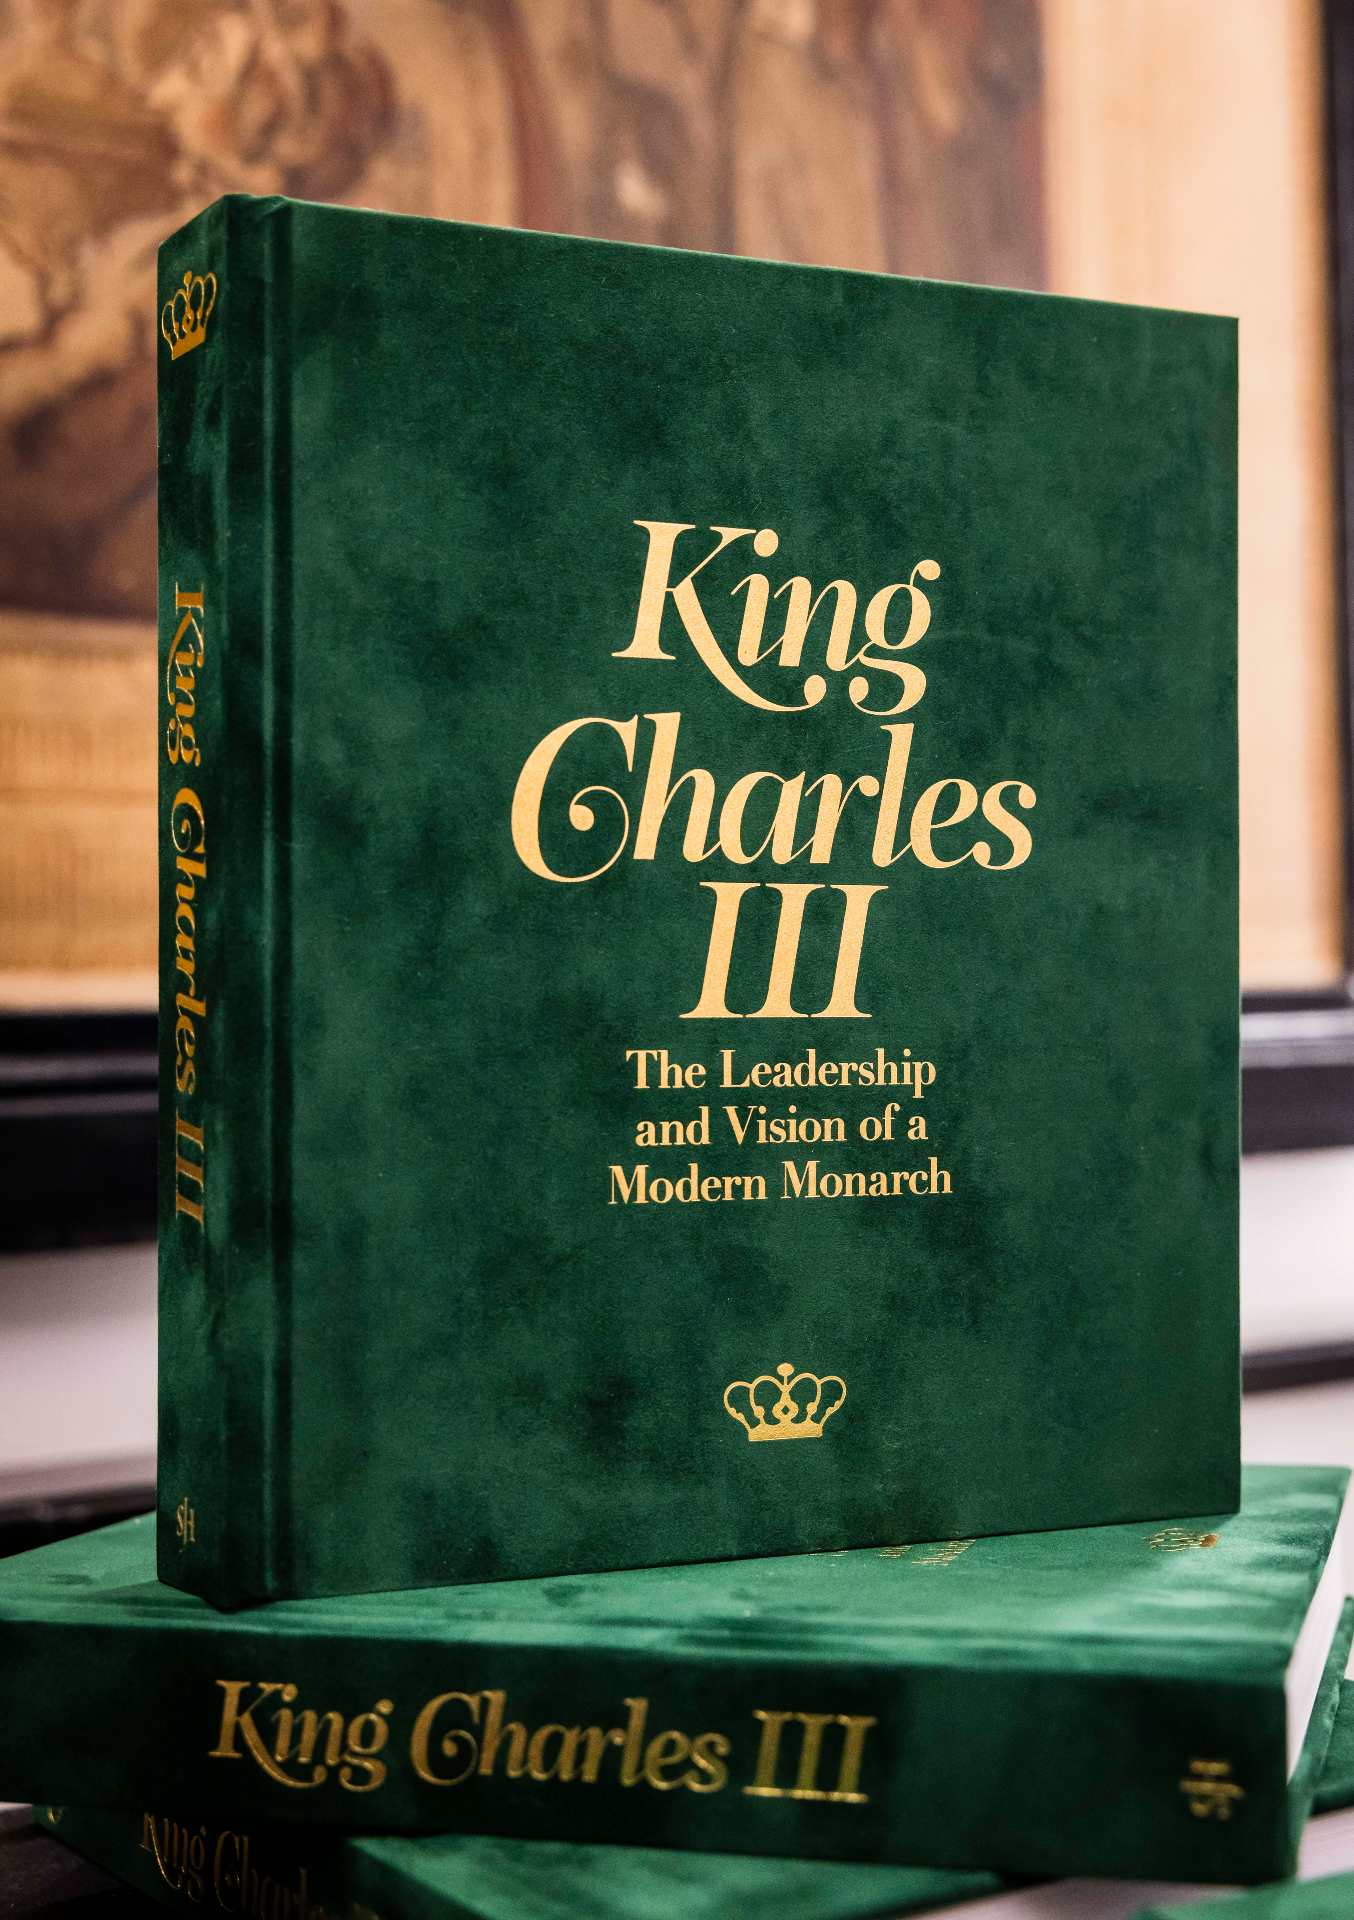 King Charles book image 2